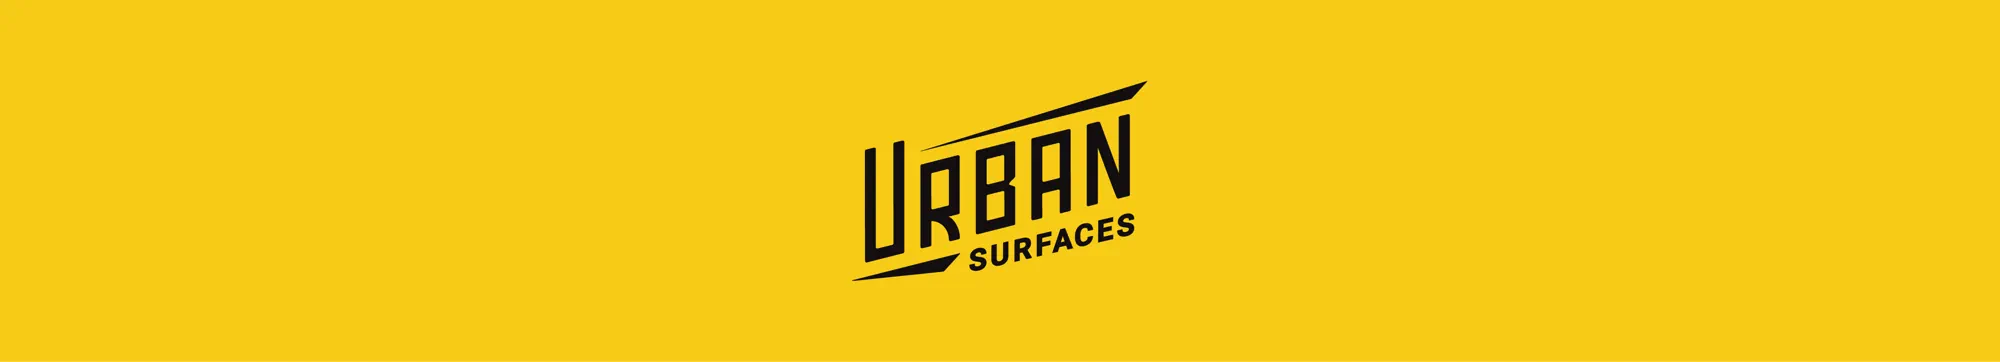 Urban Surfaces logo on yellow background.